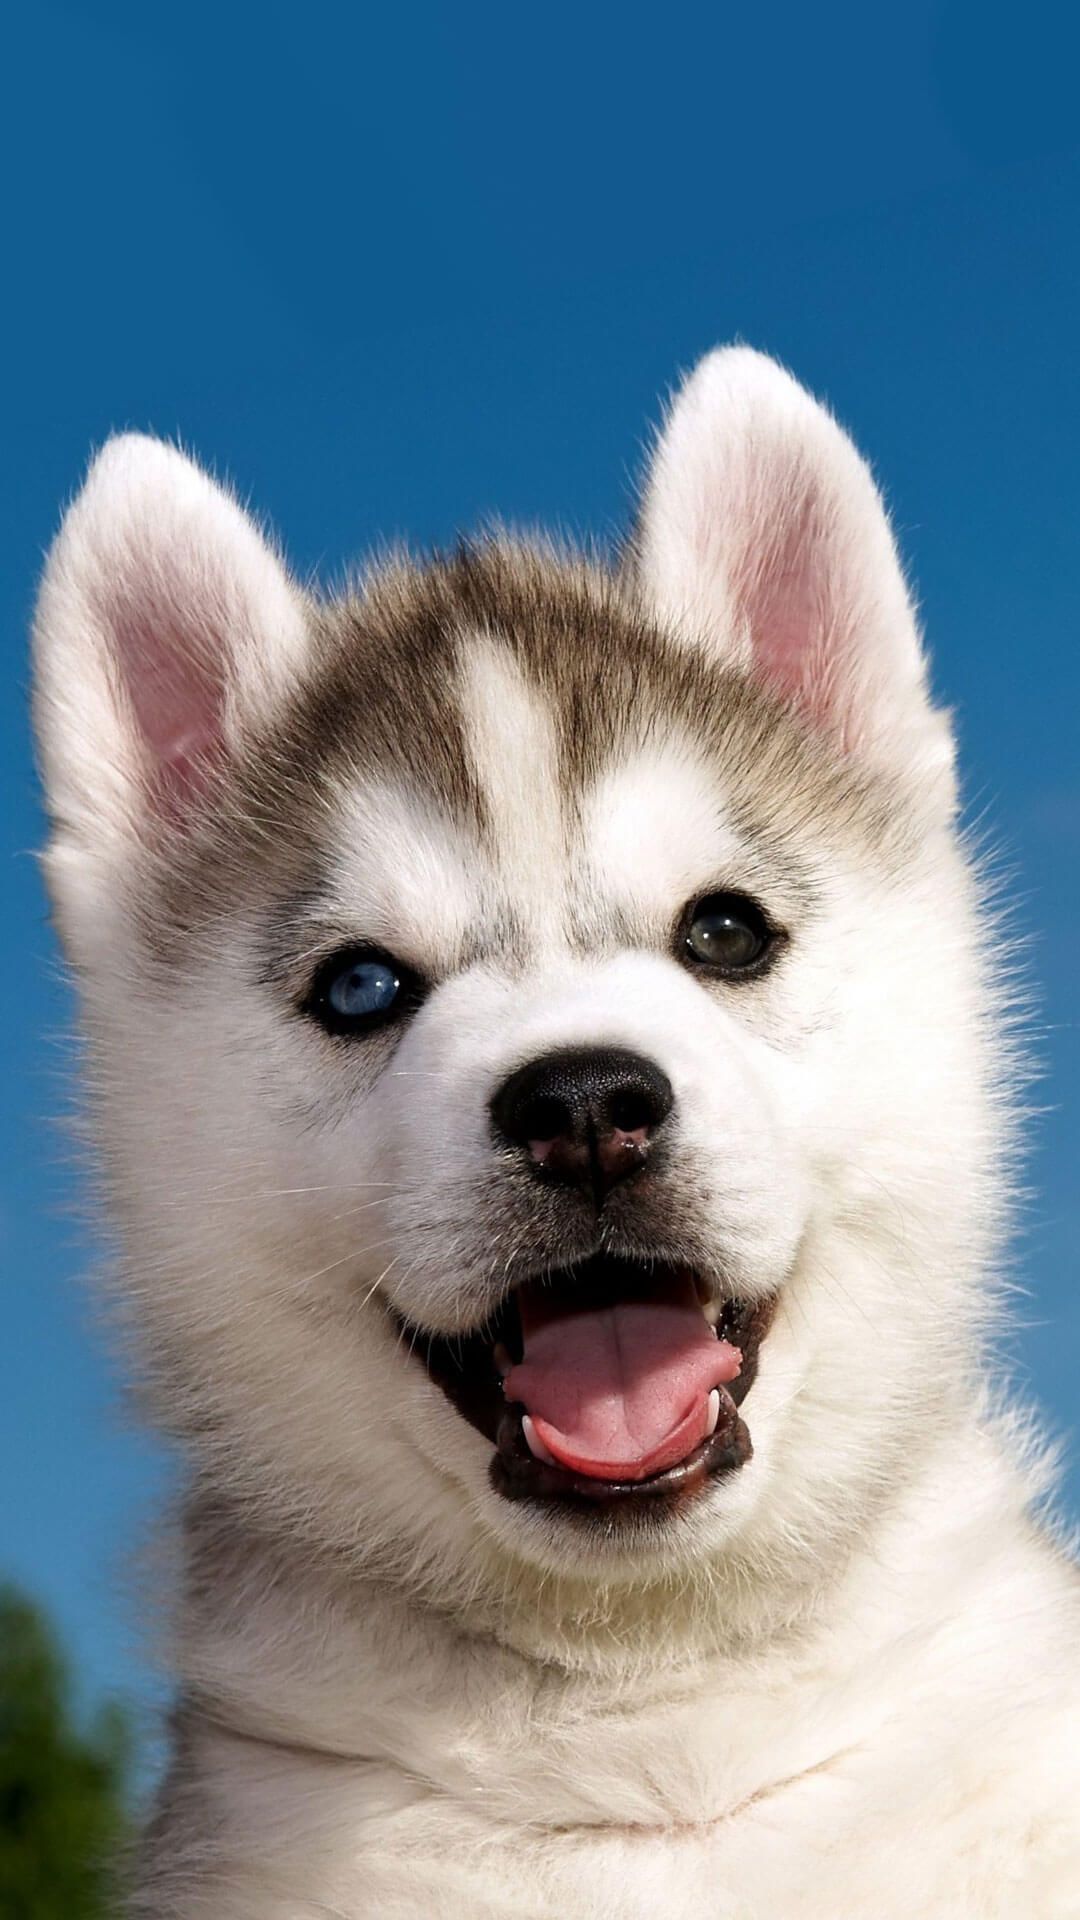 42) Cute Husky Wallpaper 2K Wallpaper. Dog wallpaper, Cute dog wallpaper, Dog wallpaper iphone